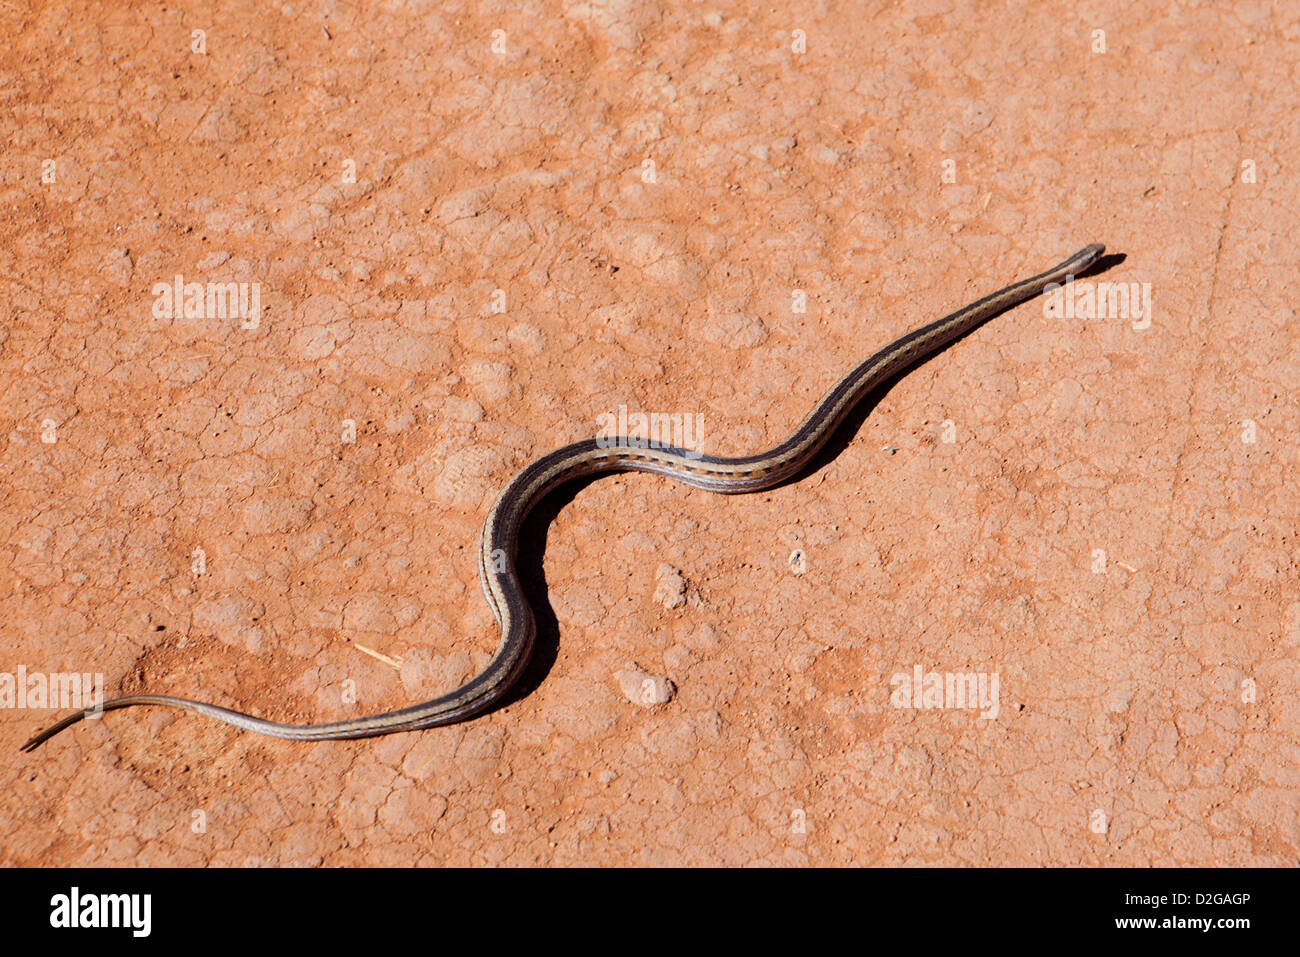 Madagaskar, Ambalavao, Reserve dAnja, gemeinsame großäugigen Schlange Mimophis Mahfalensis Kreuzung nackten Erde Pfad Stockfoto